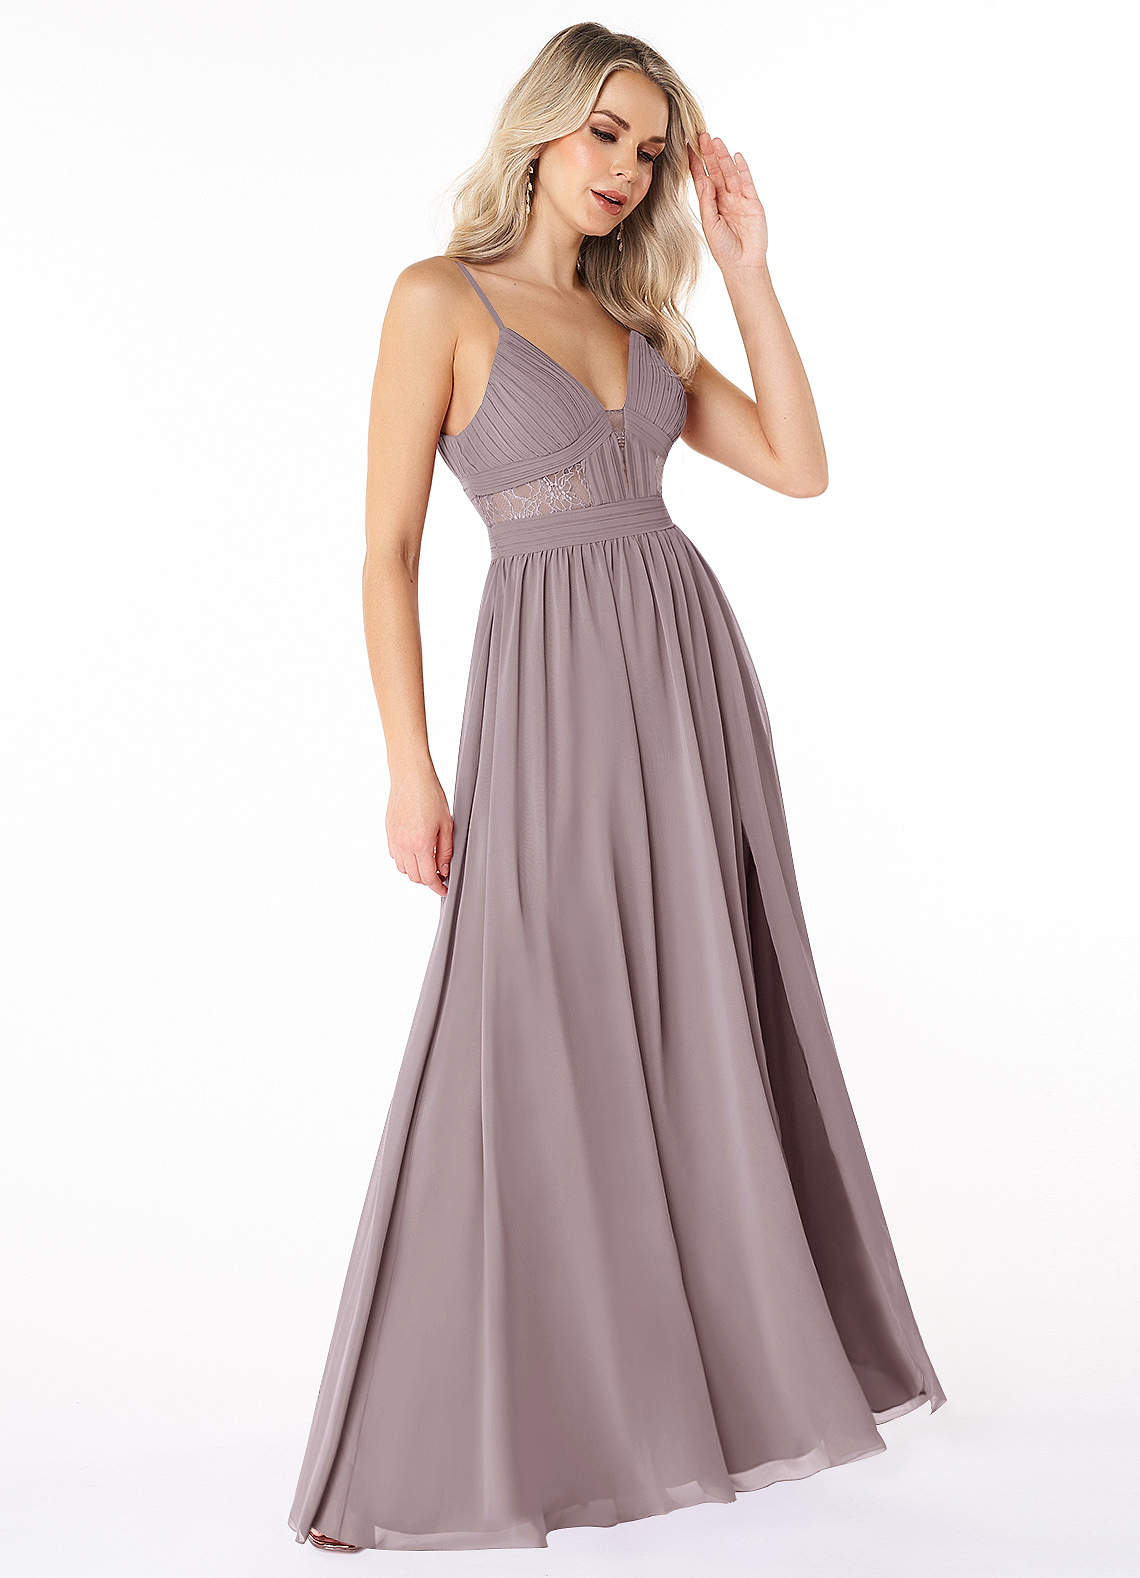 Azazie Elsy Bridesmaid Dresses A-Line Lace Chiffon Floor-Length Dress image1